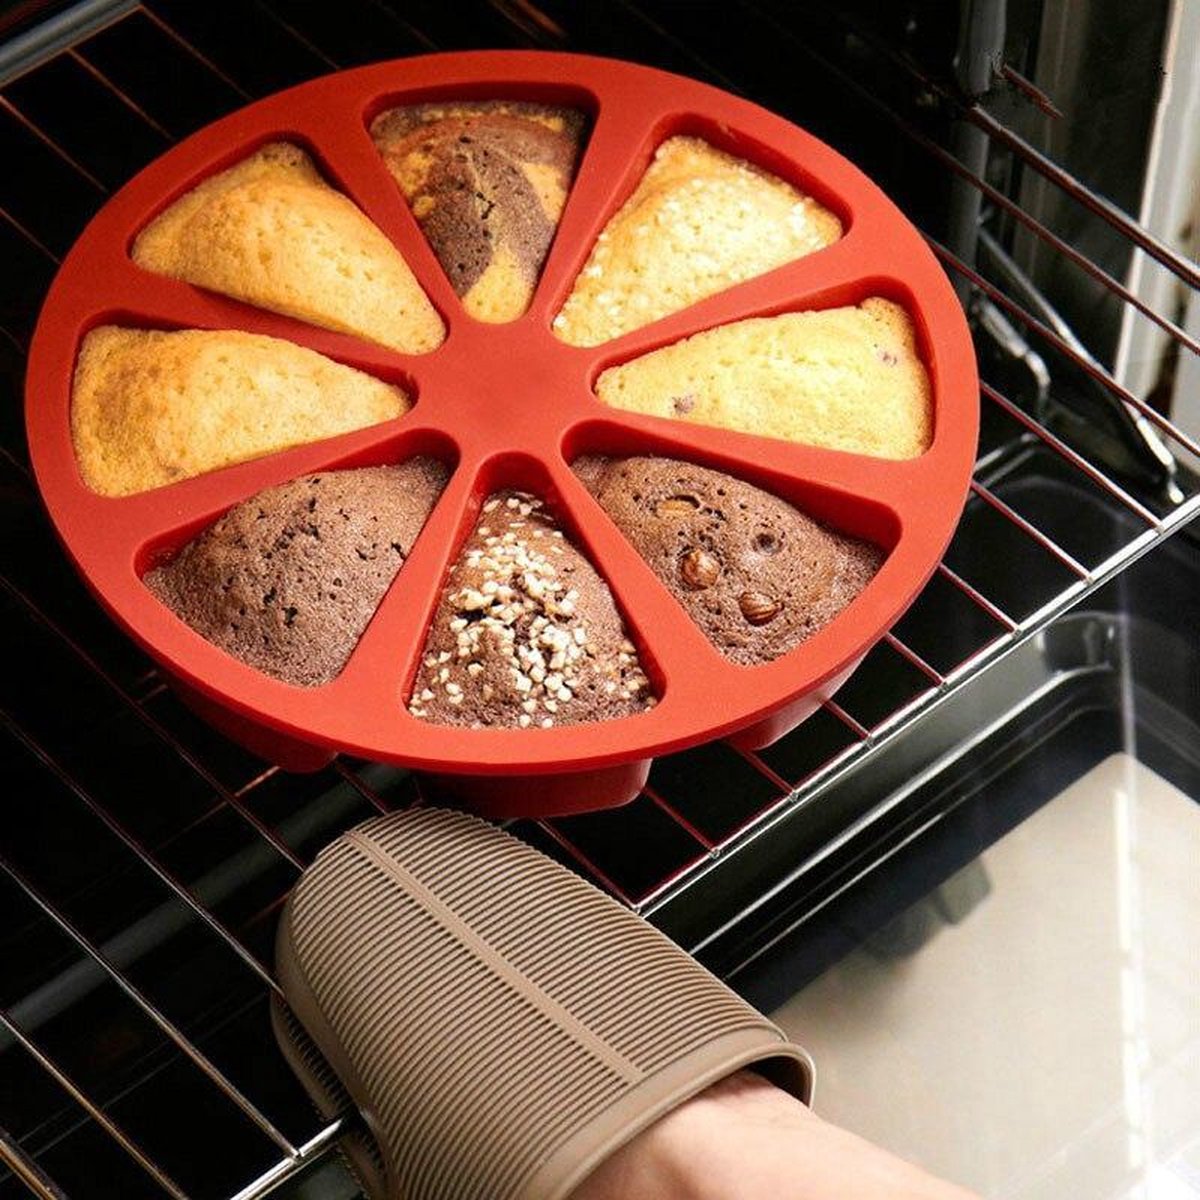 Siliconen Cake Bakvorm - Siliconen Taart punt Bakvorm - Pizza Cakevorm - Cavity Cake - Driehoek Slices - Cake Mold - Bakken - 8 Porties in 1 keer - Rood